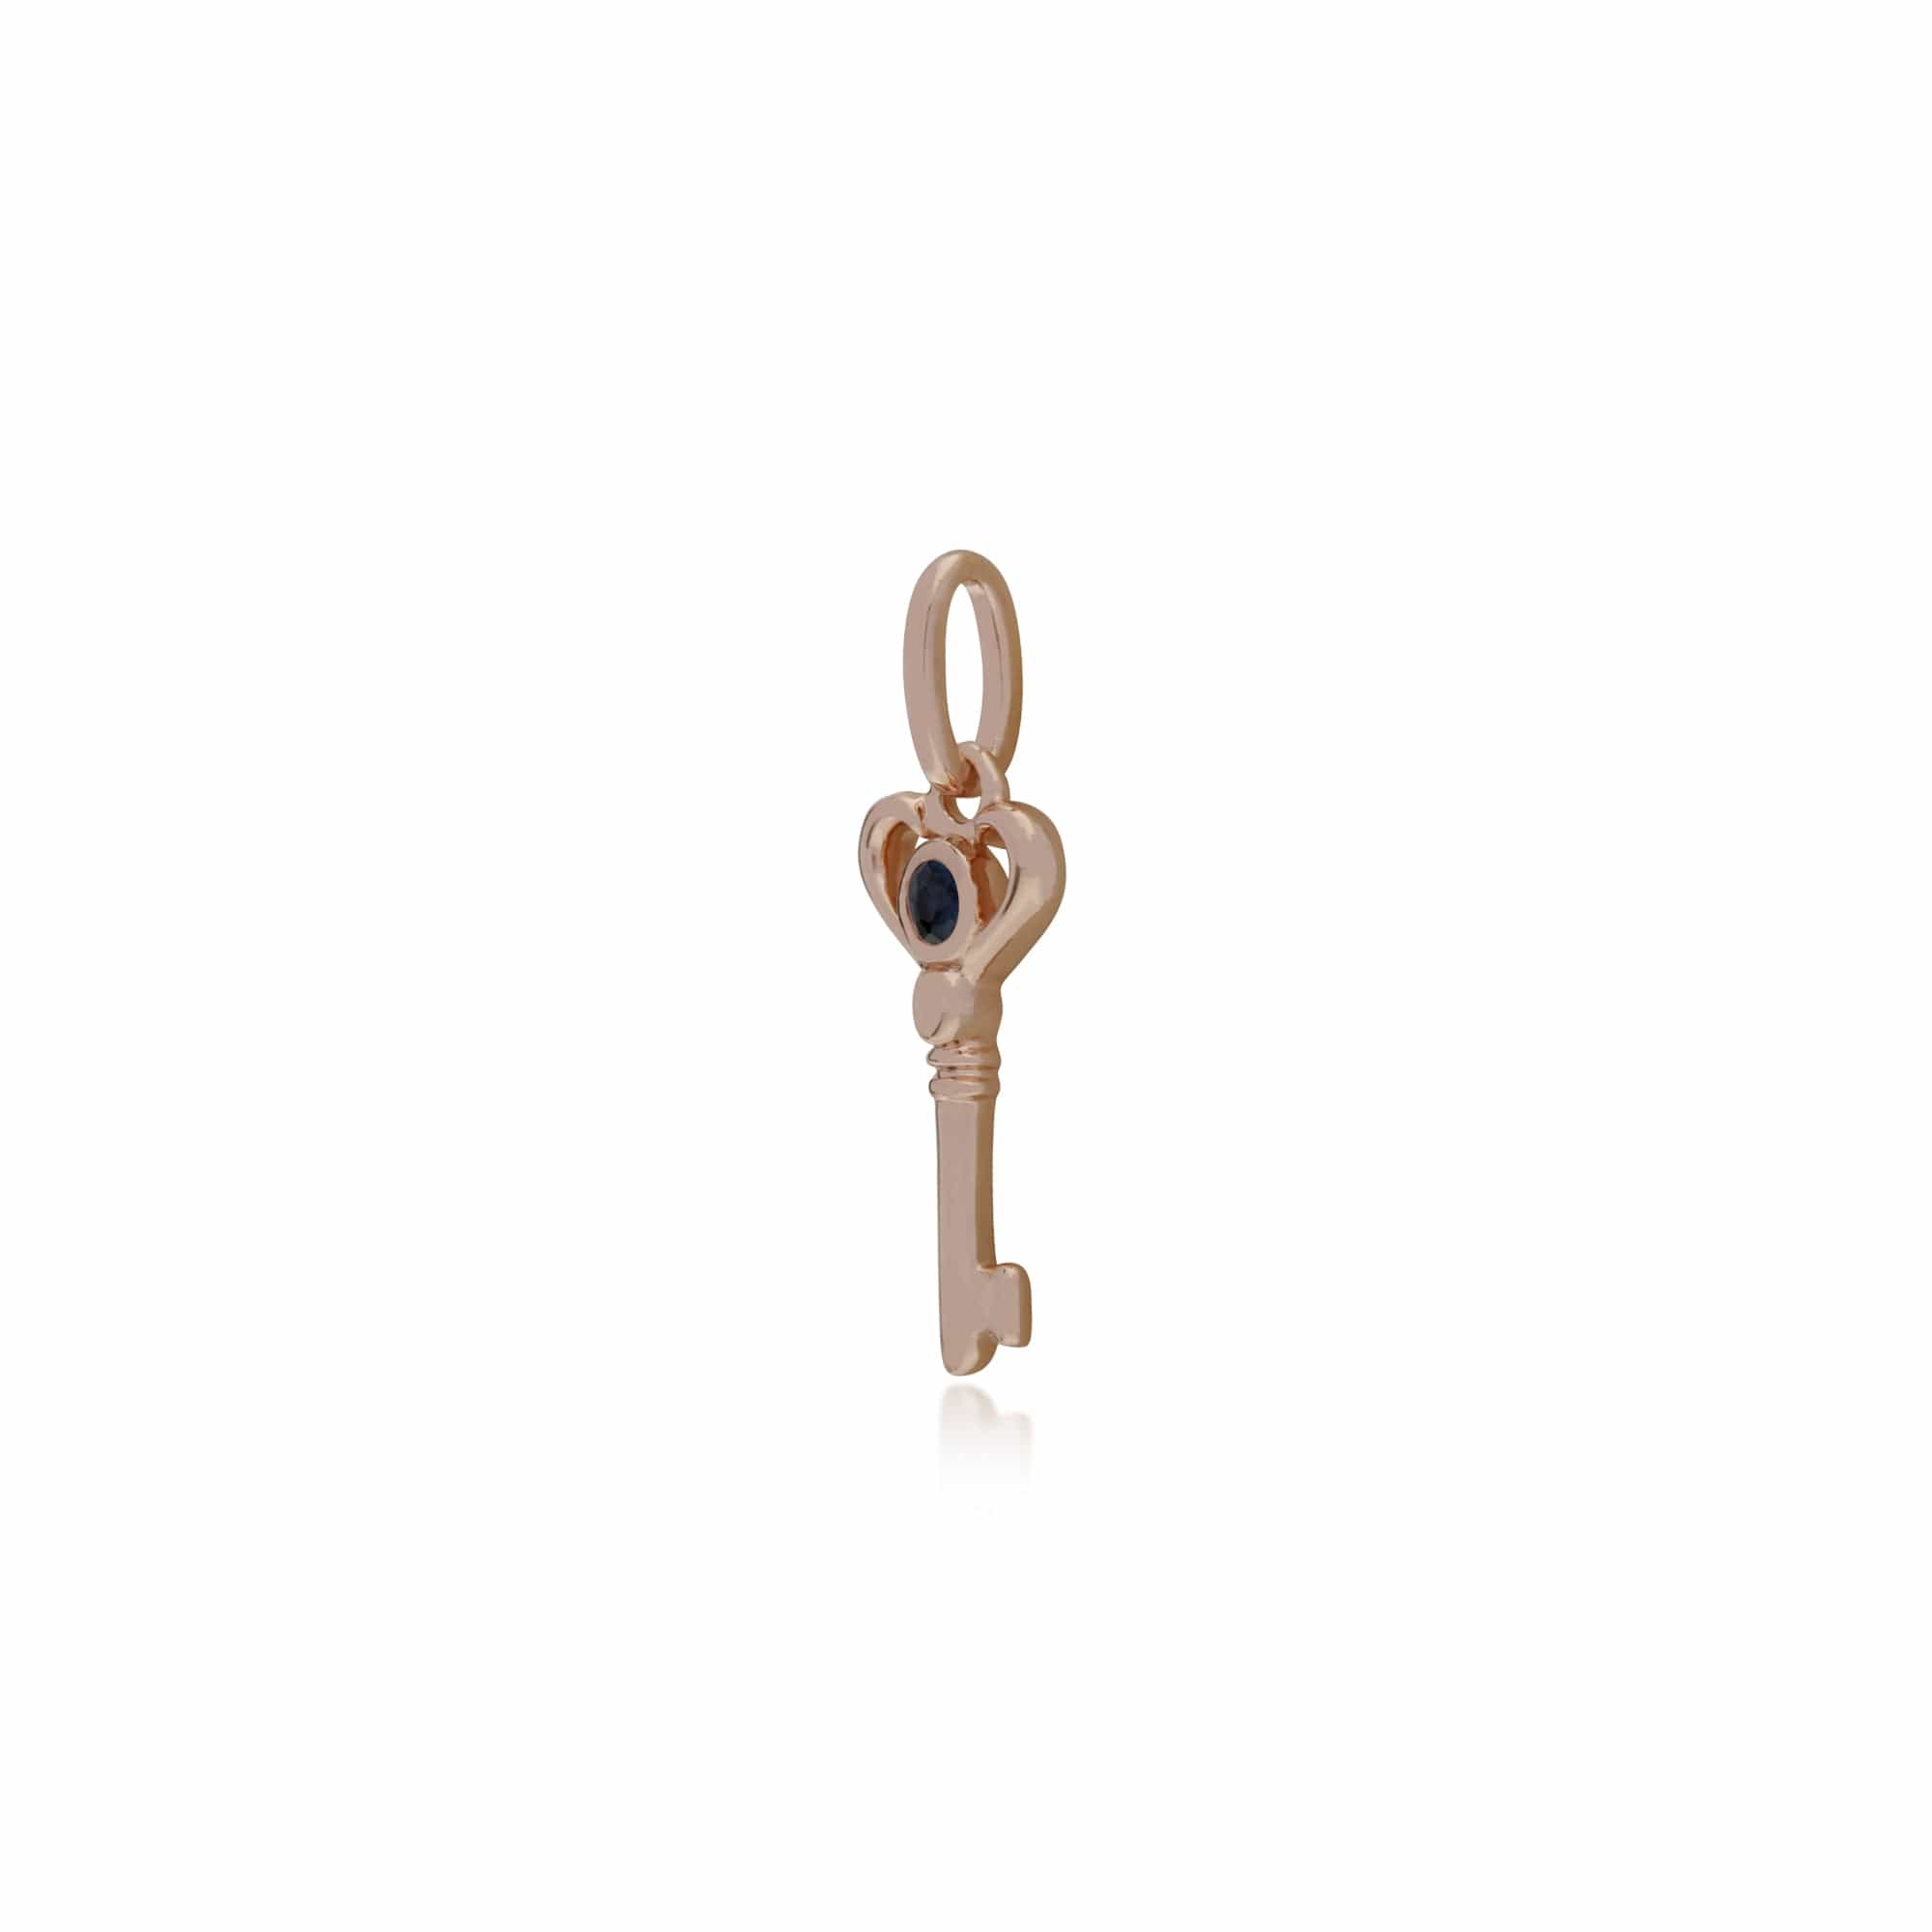 Gemondo Rose Gold Plated Sterling Silver Sapphire Small Key Charm - Gemondo